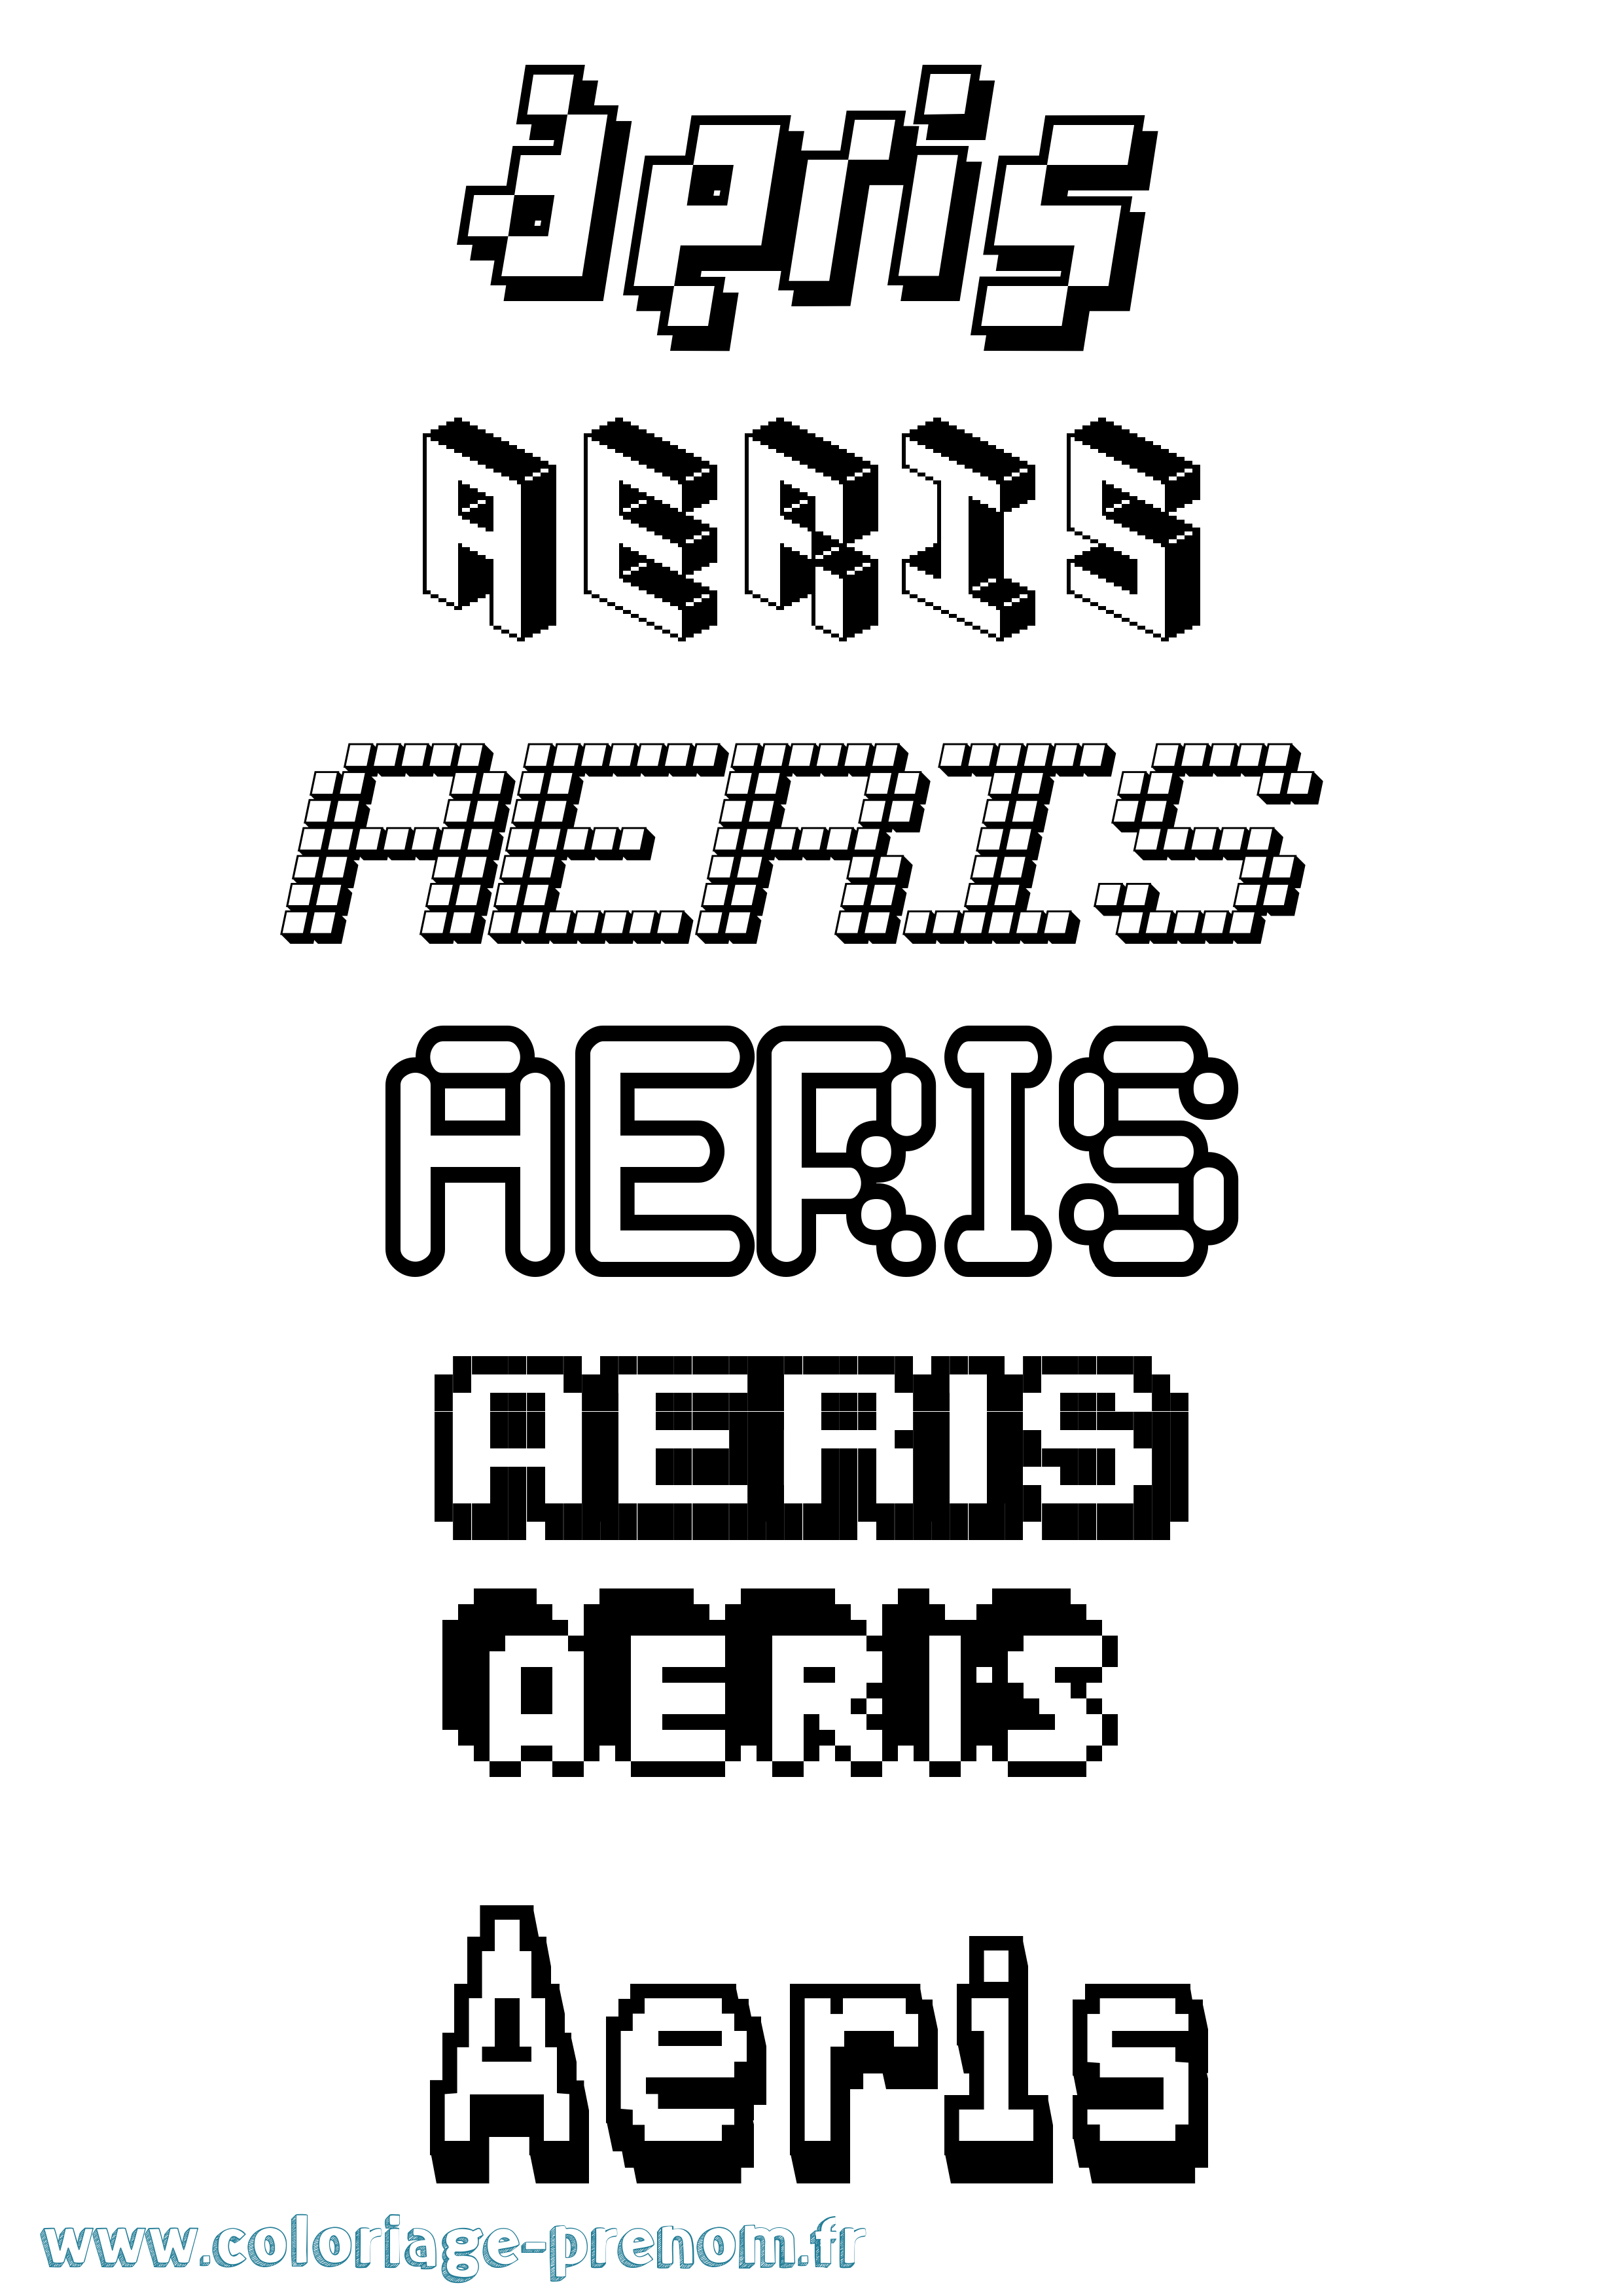 Coloriage prénom Aeris Pixel